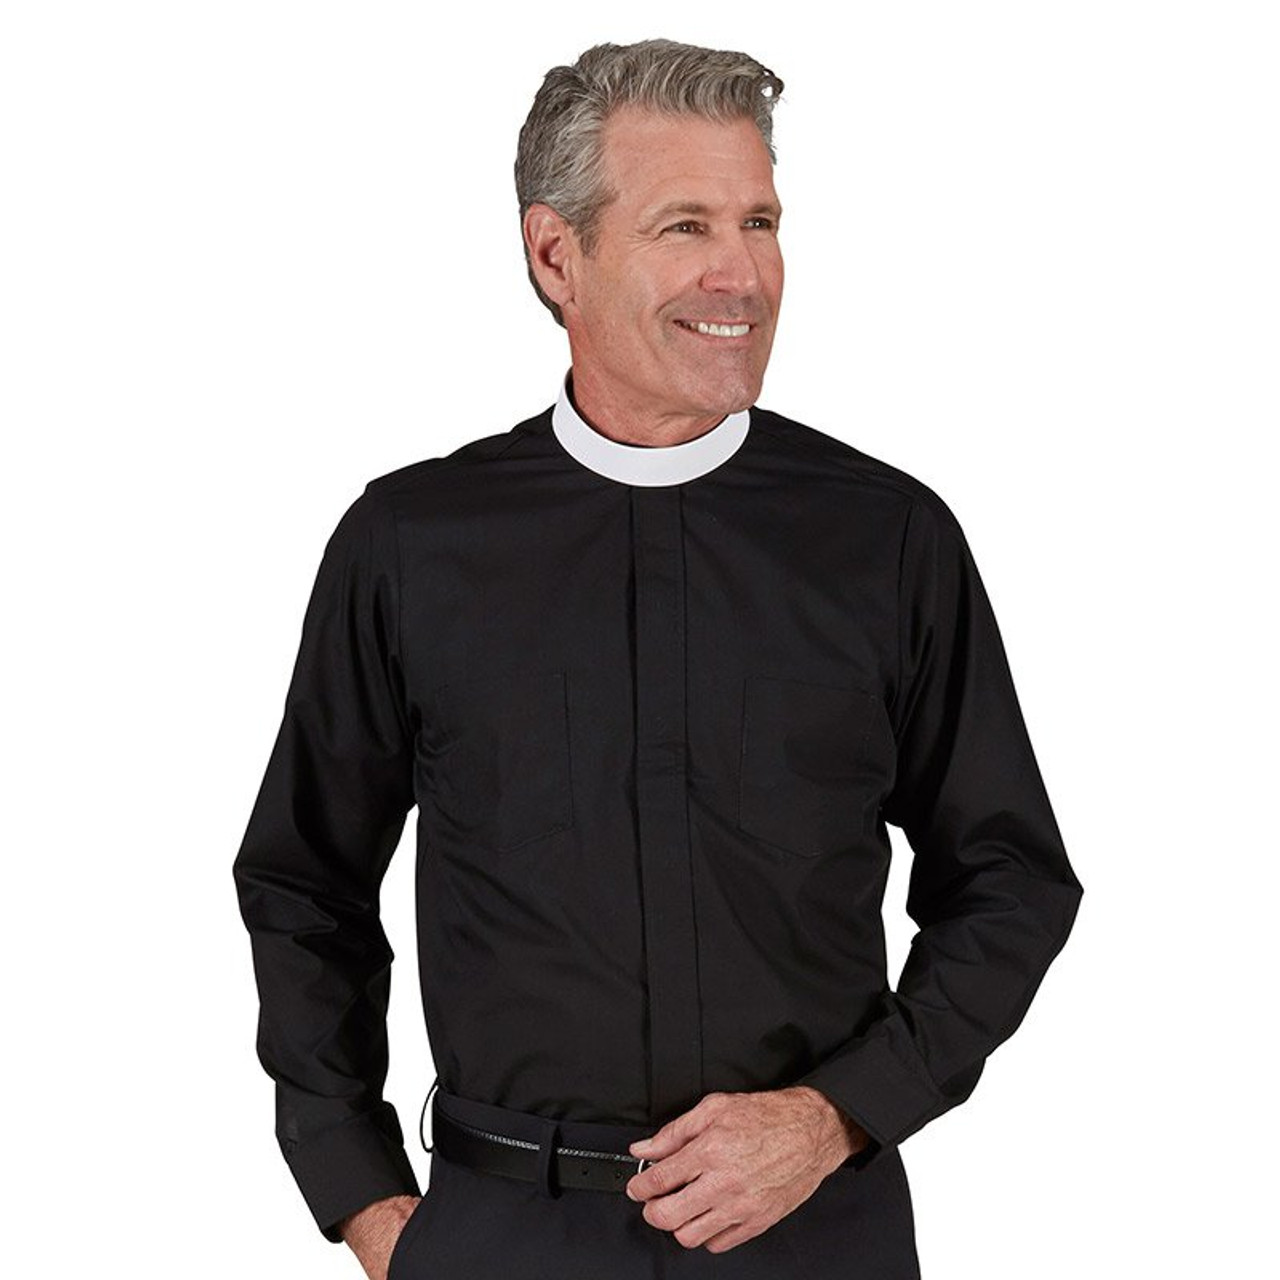 Clerical Shirt Neckband Collar Black Size 15.5-34/35